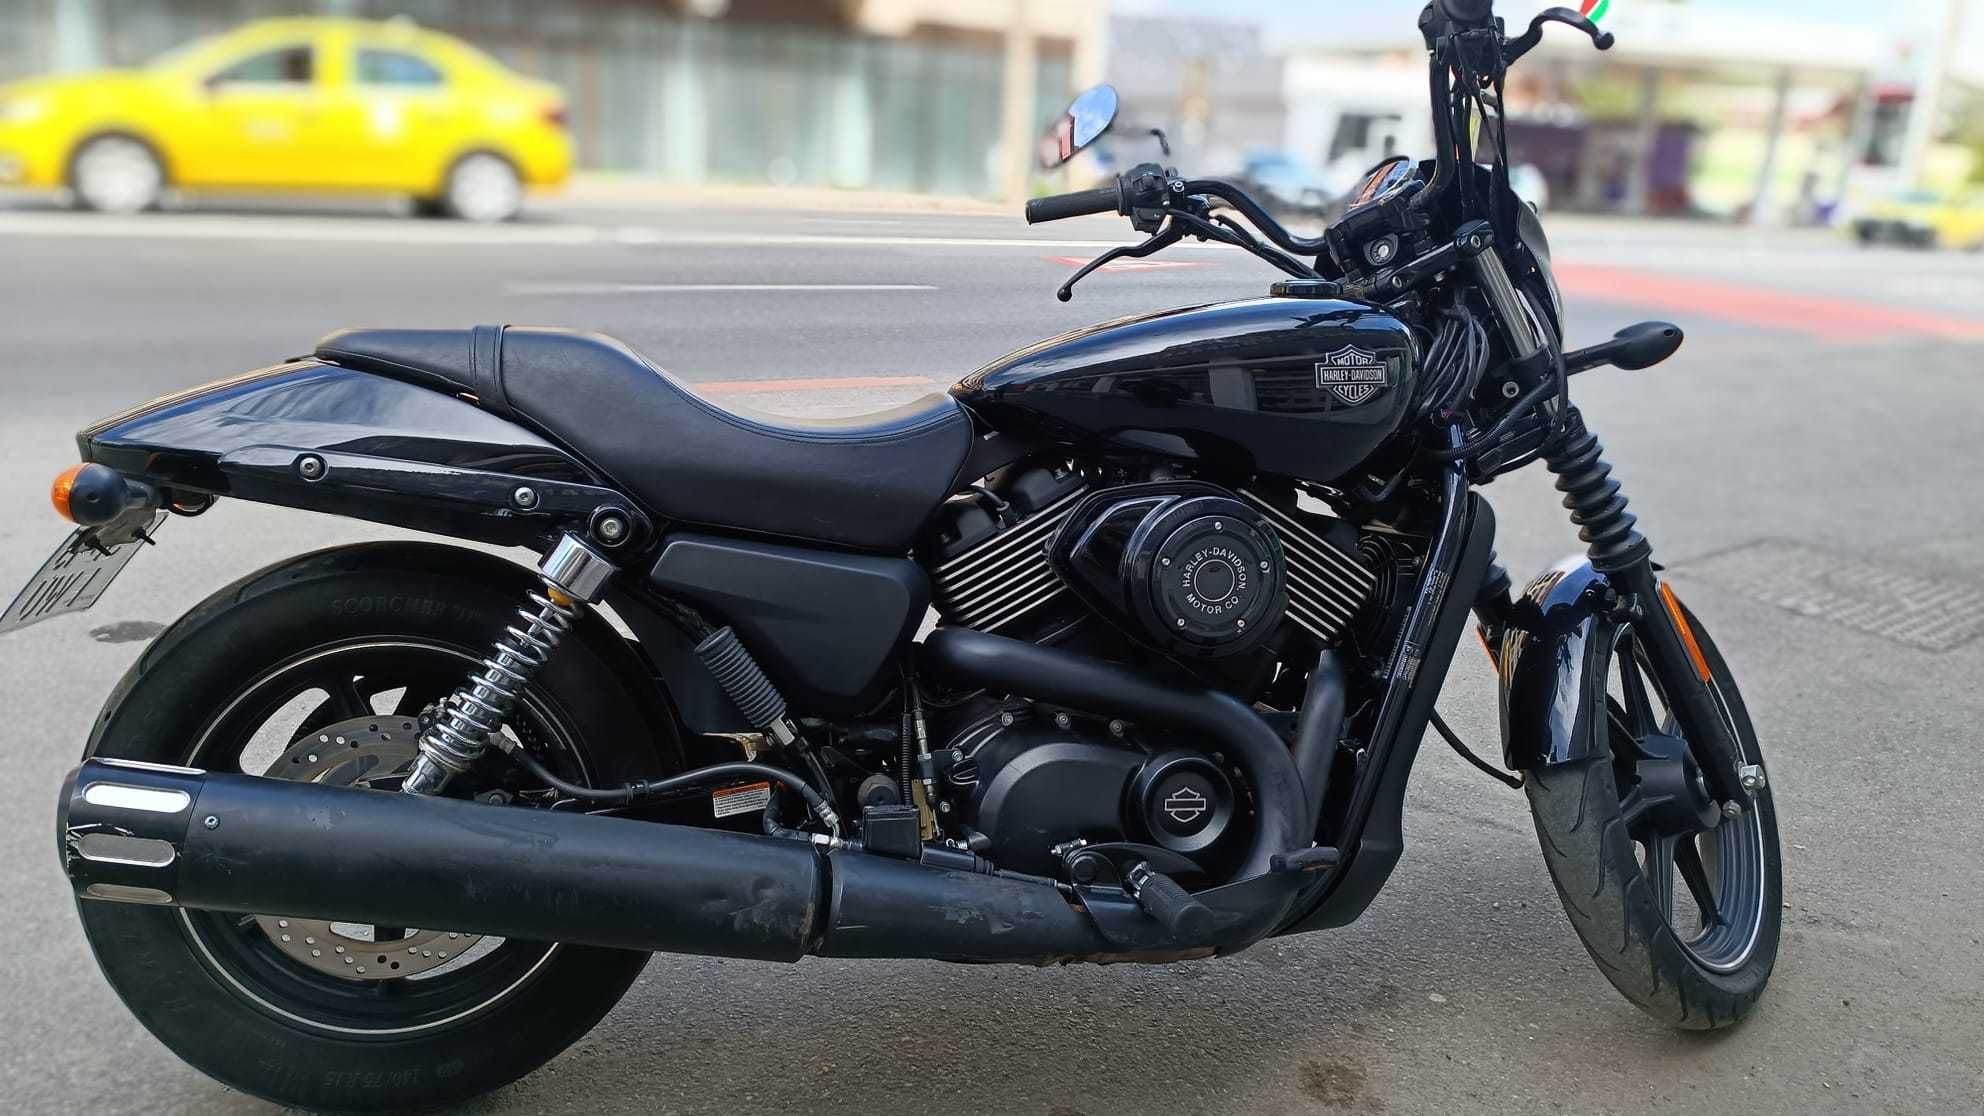 Liquid Money vinde - Motocicleta Harley Davidson